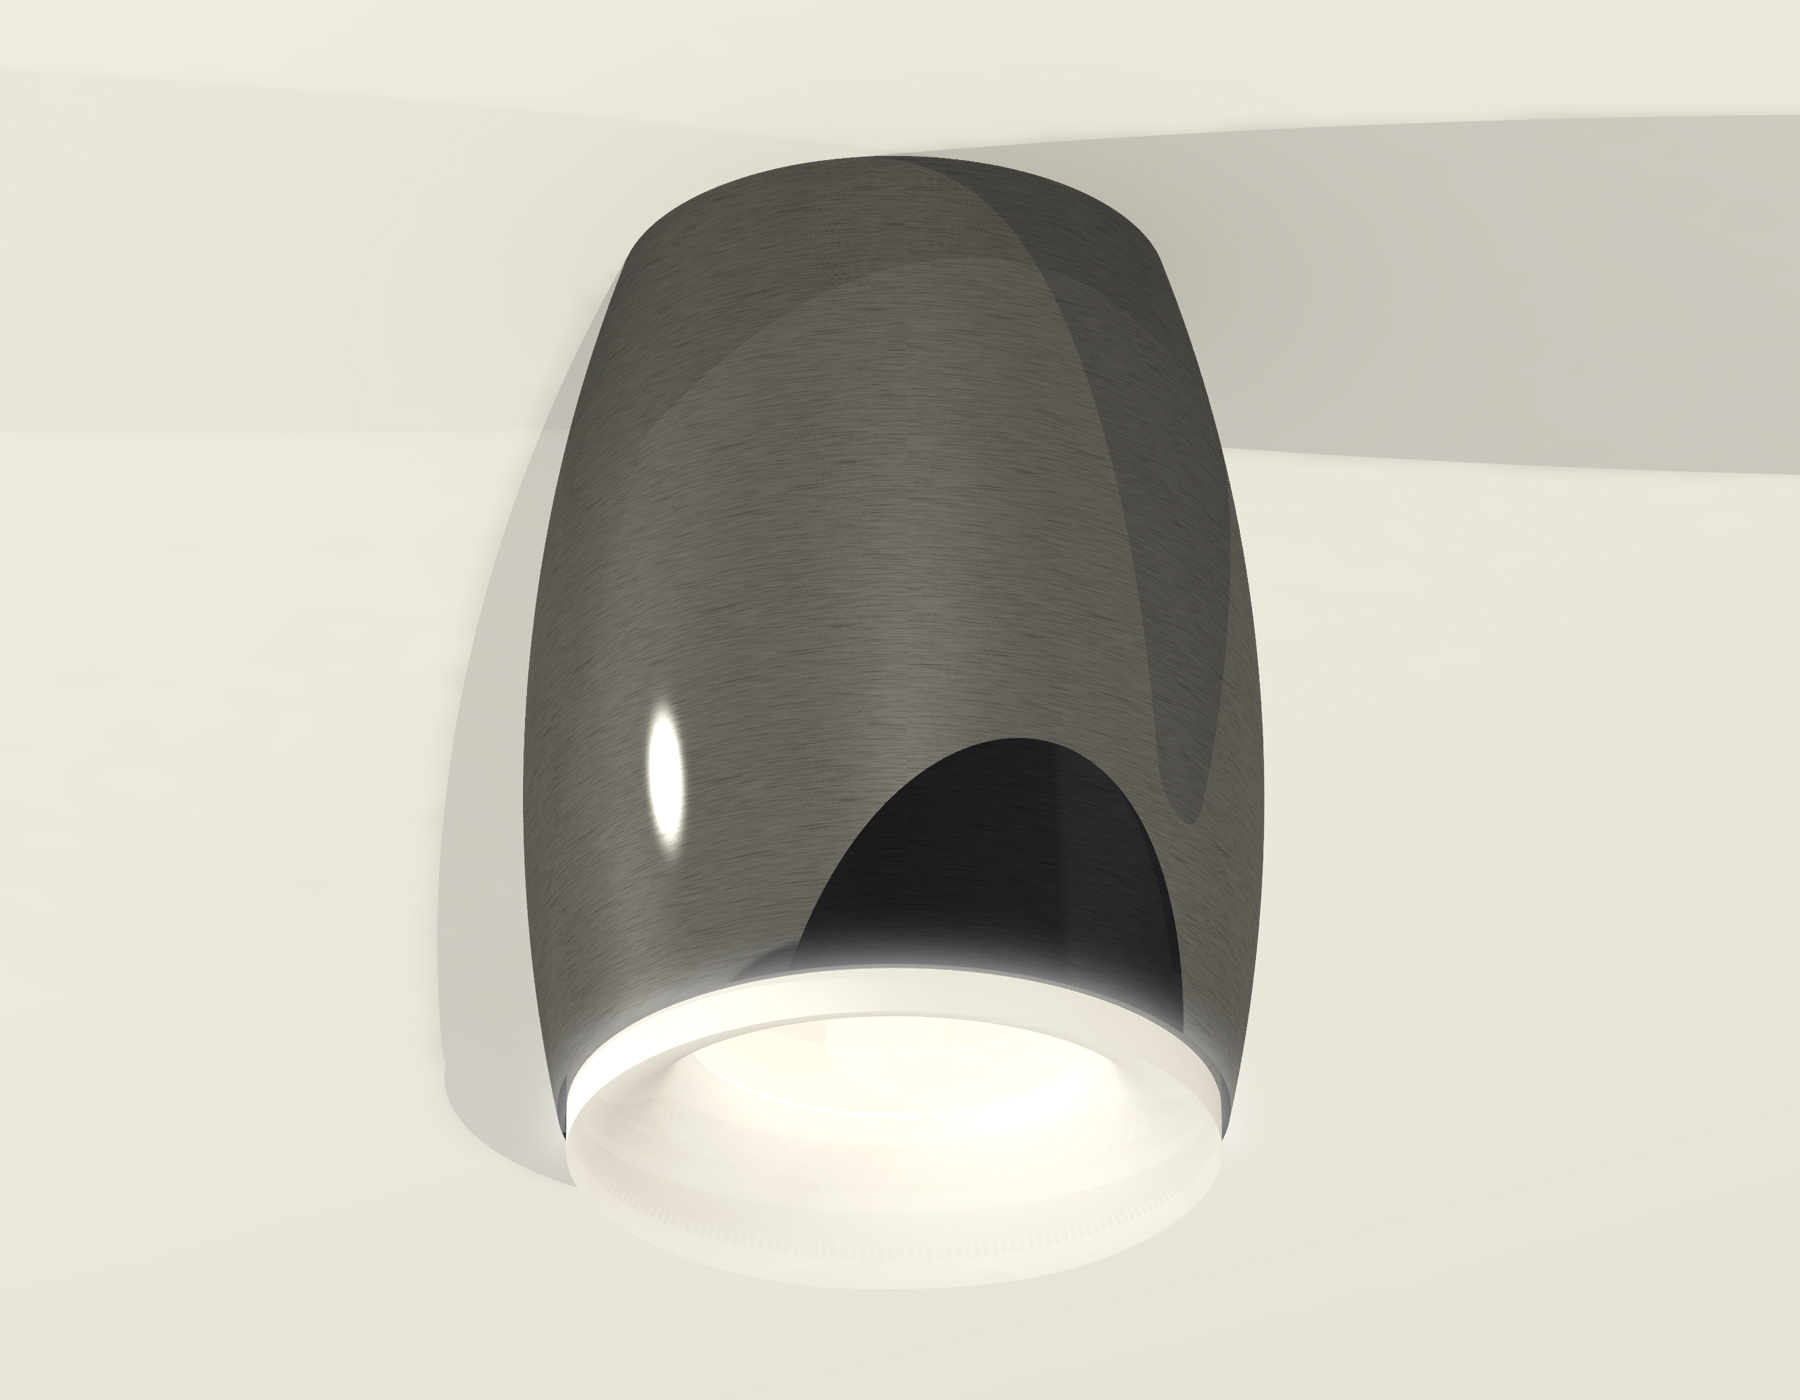 Накладной светильник Ambrella Light Techno XS1123021 (C1123, N7165) в #REGION_NAME_DECLINE_PP#